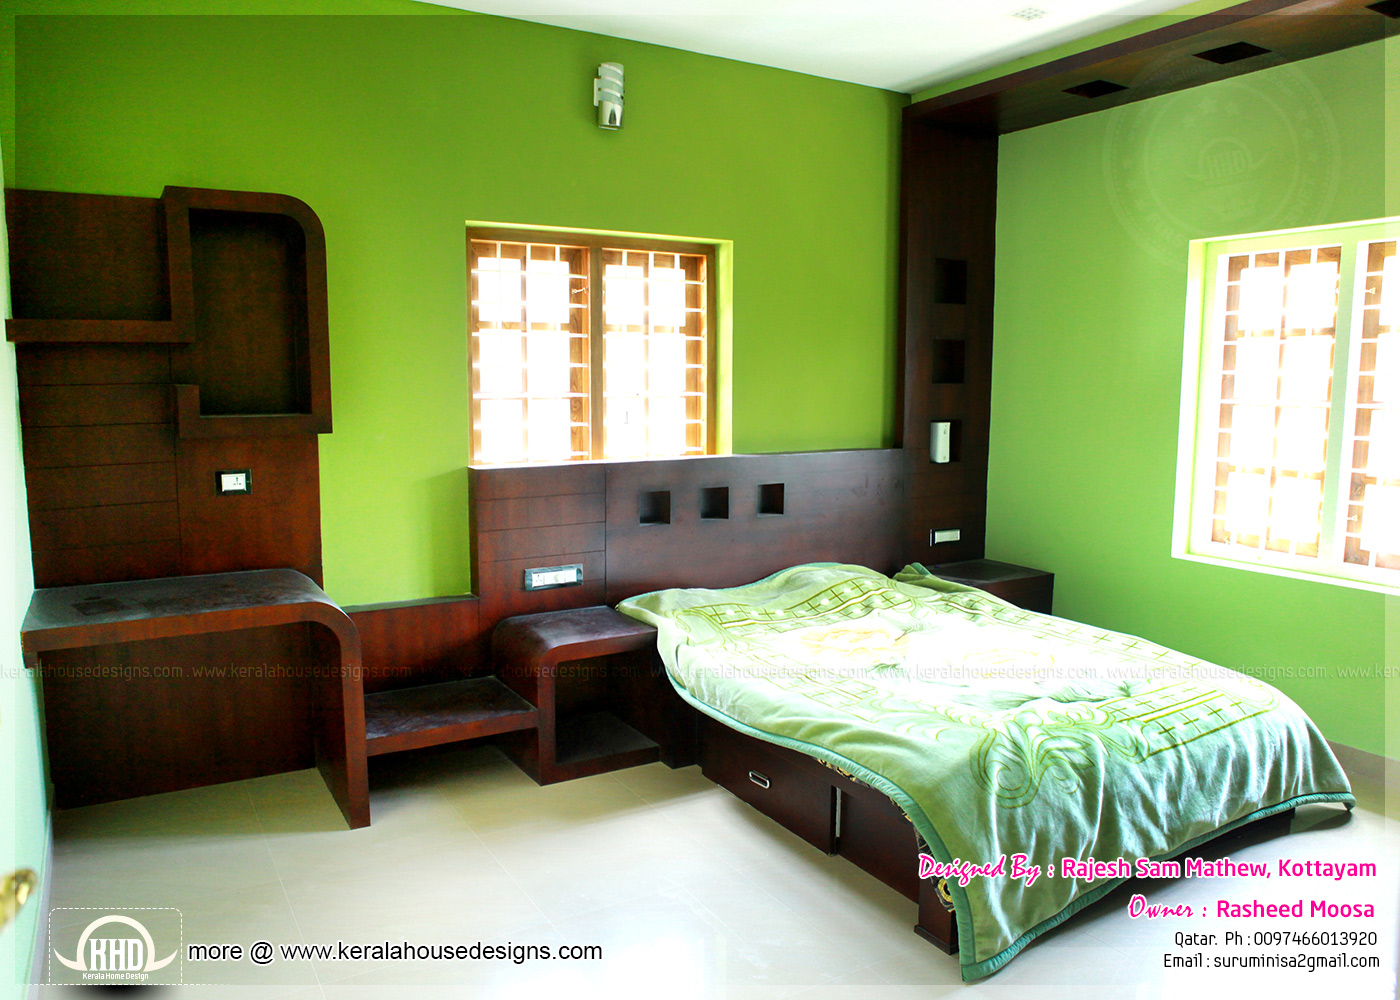 Kerala interior design with photos - Kerala home design and floor plans